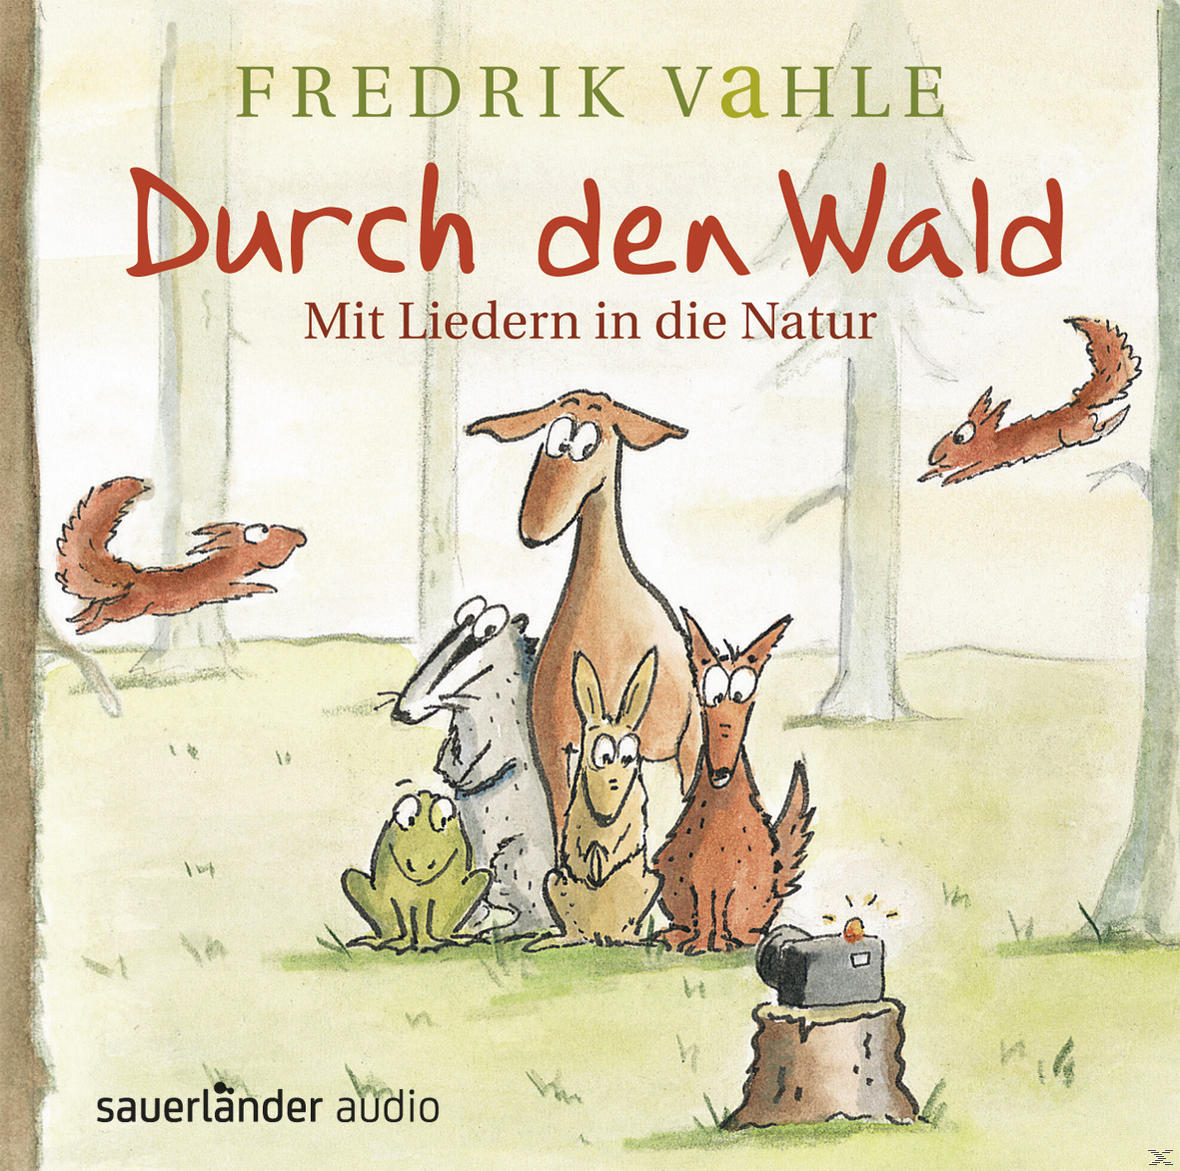 Vahle ... (CD) - Durch Wald Fredrik den -